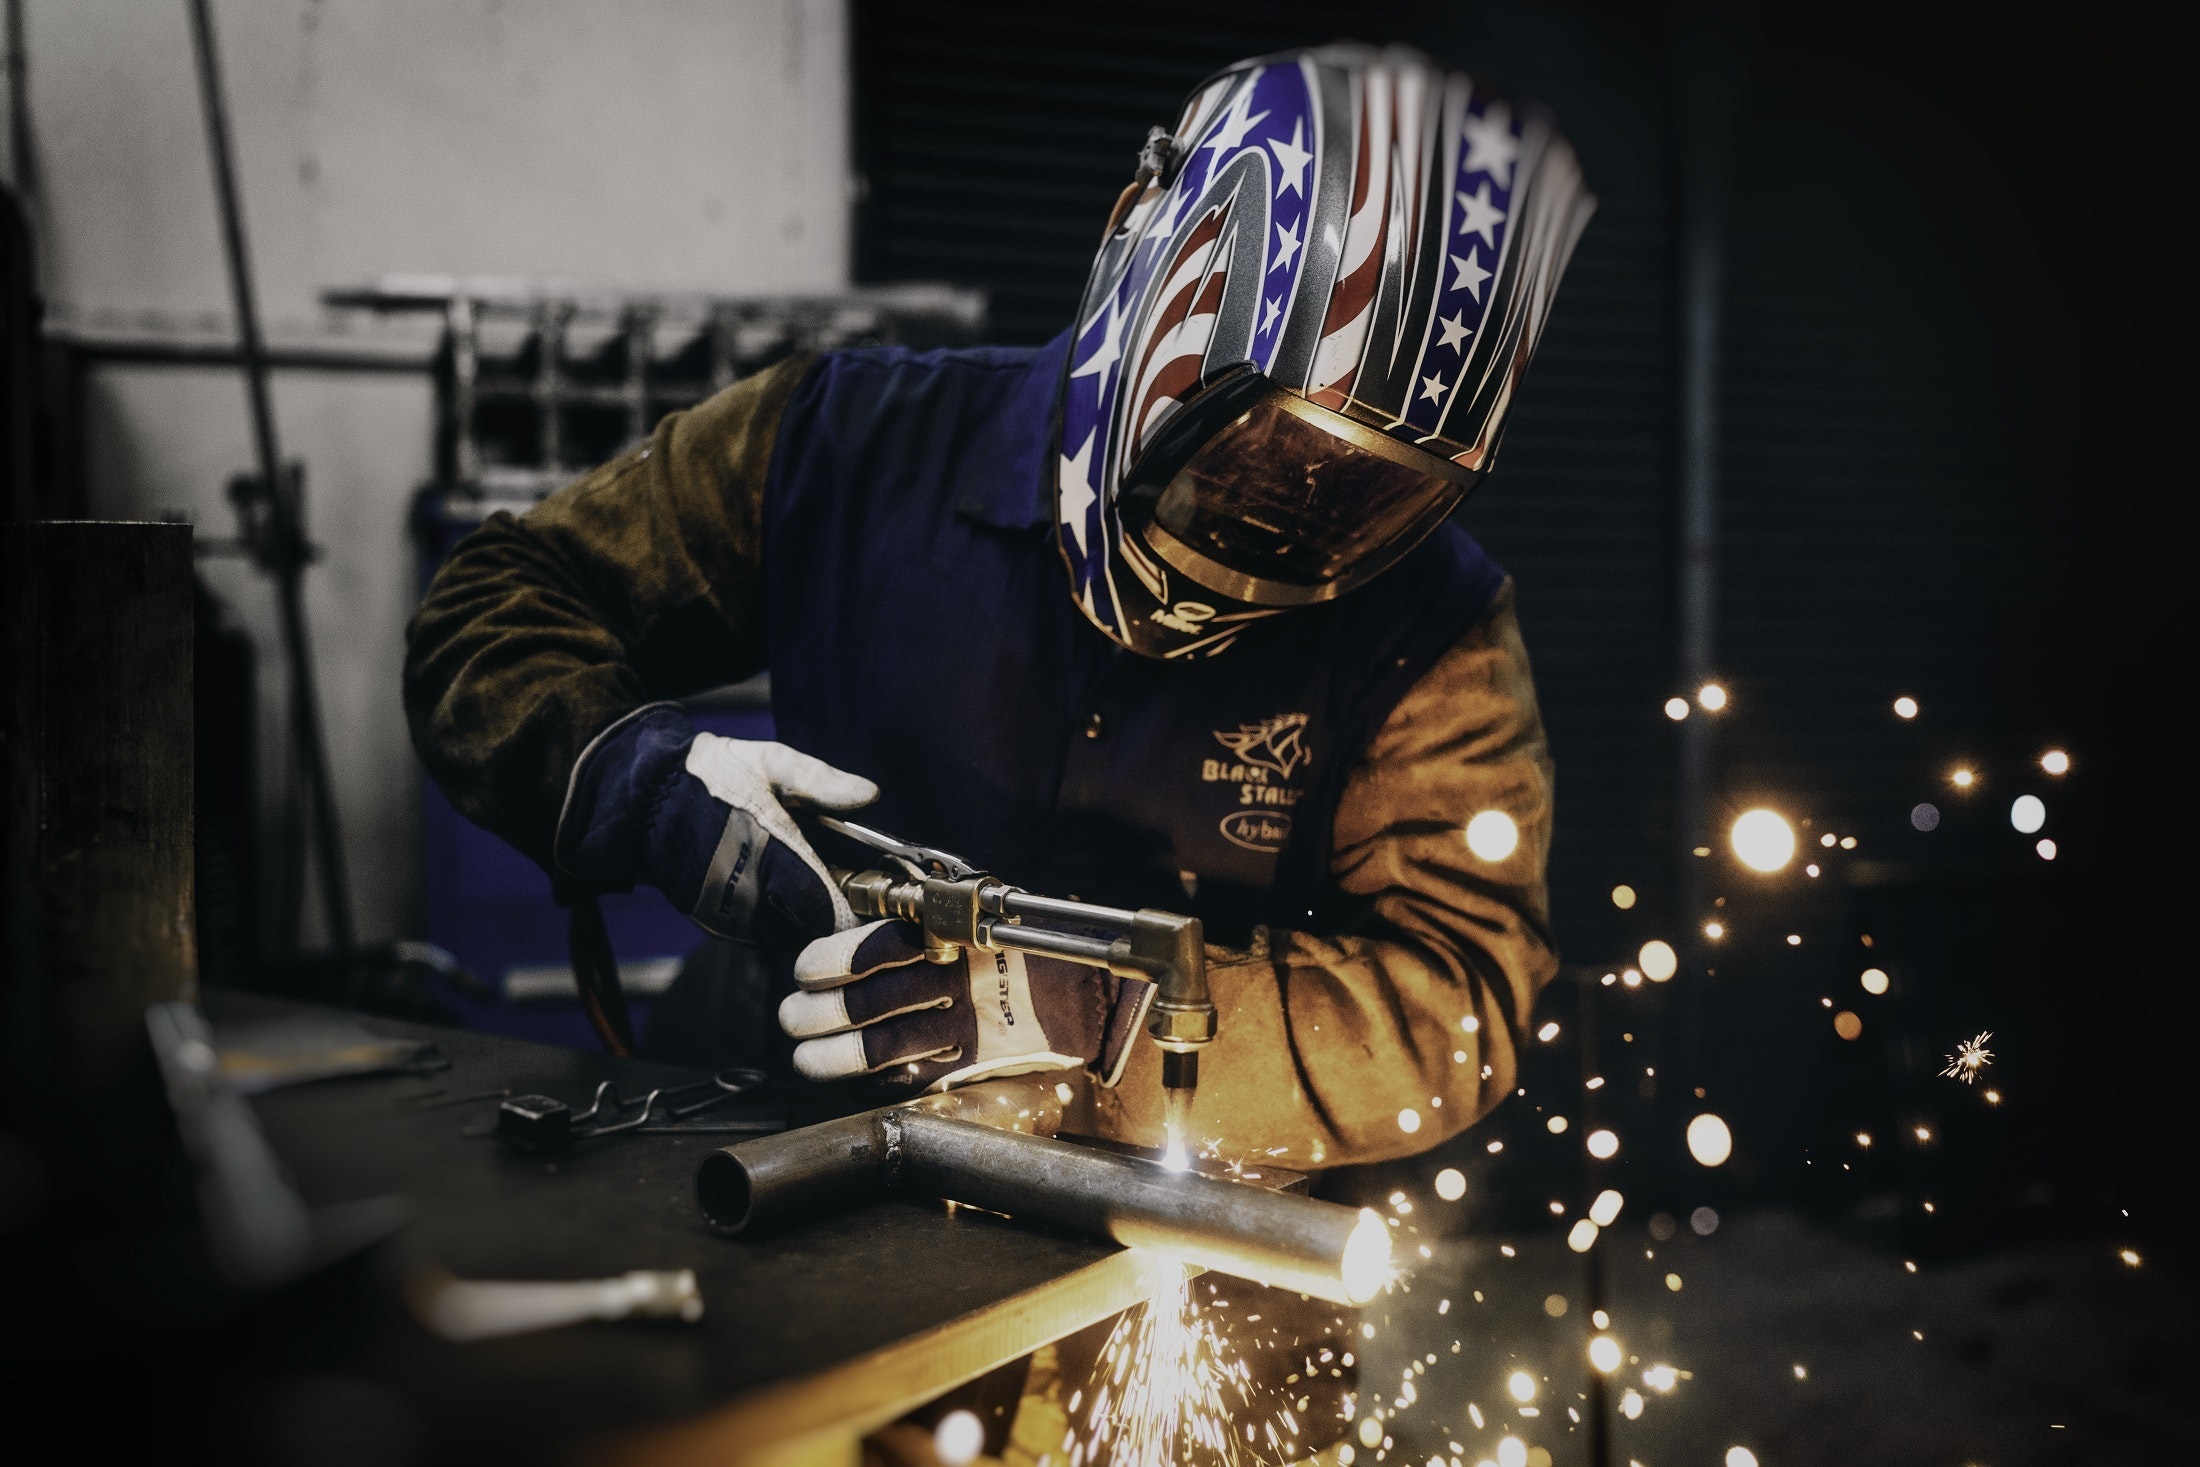 man welding | workers compensation attorney